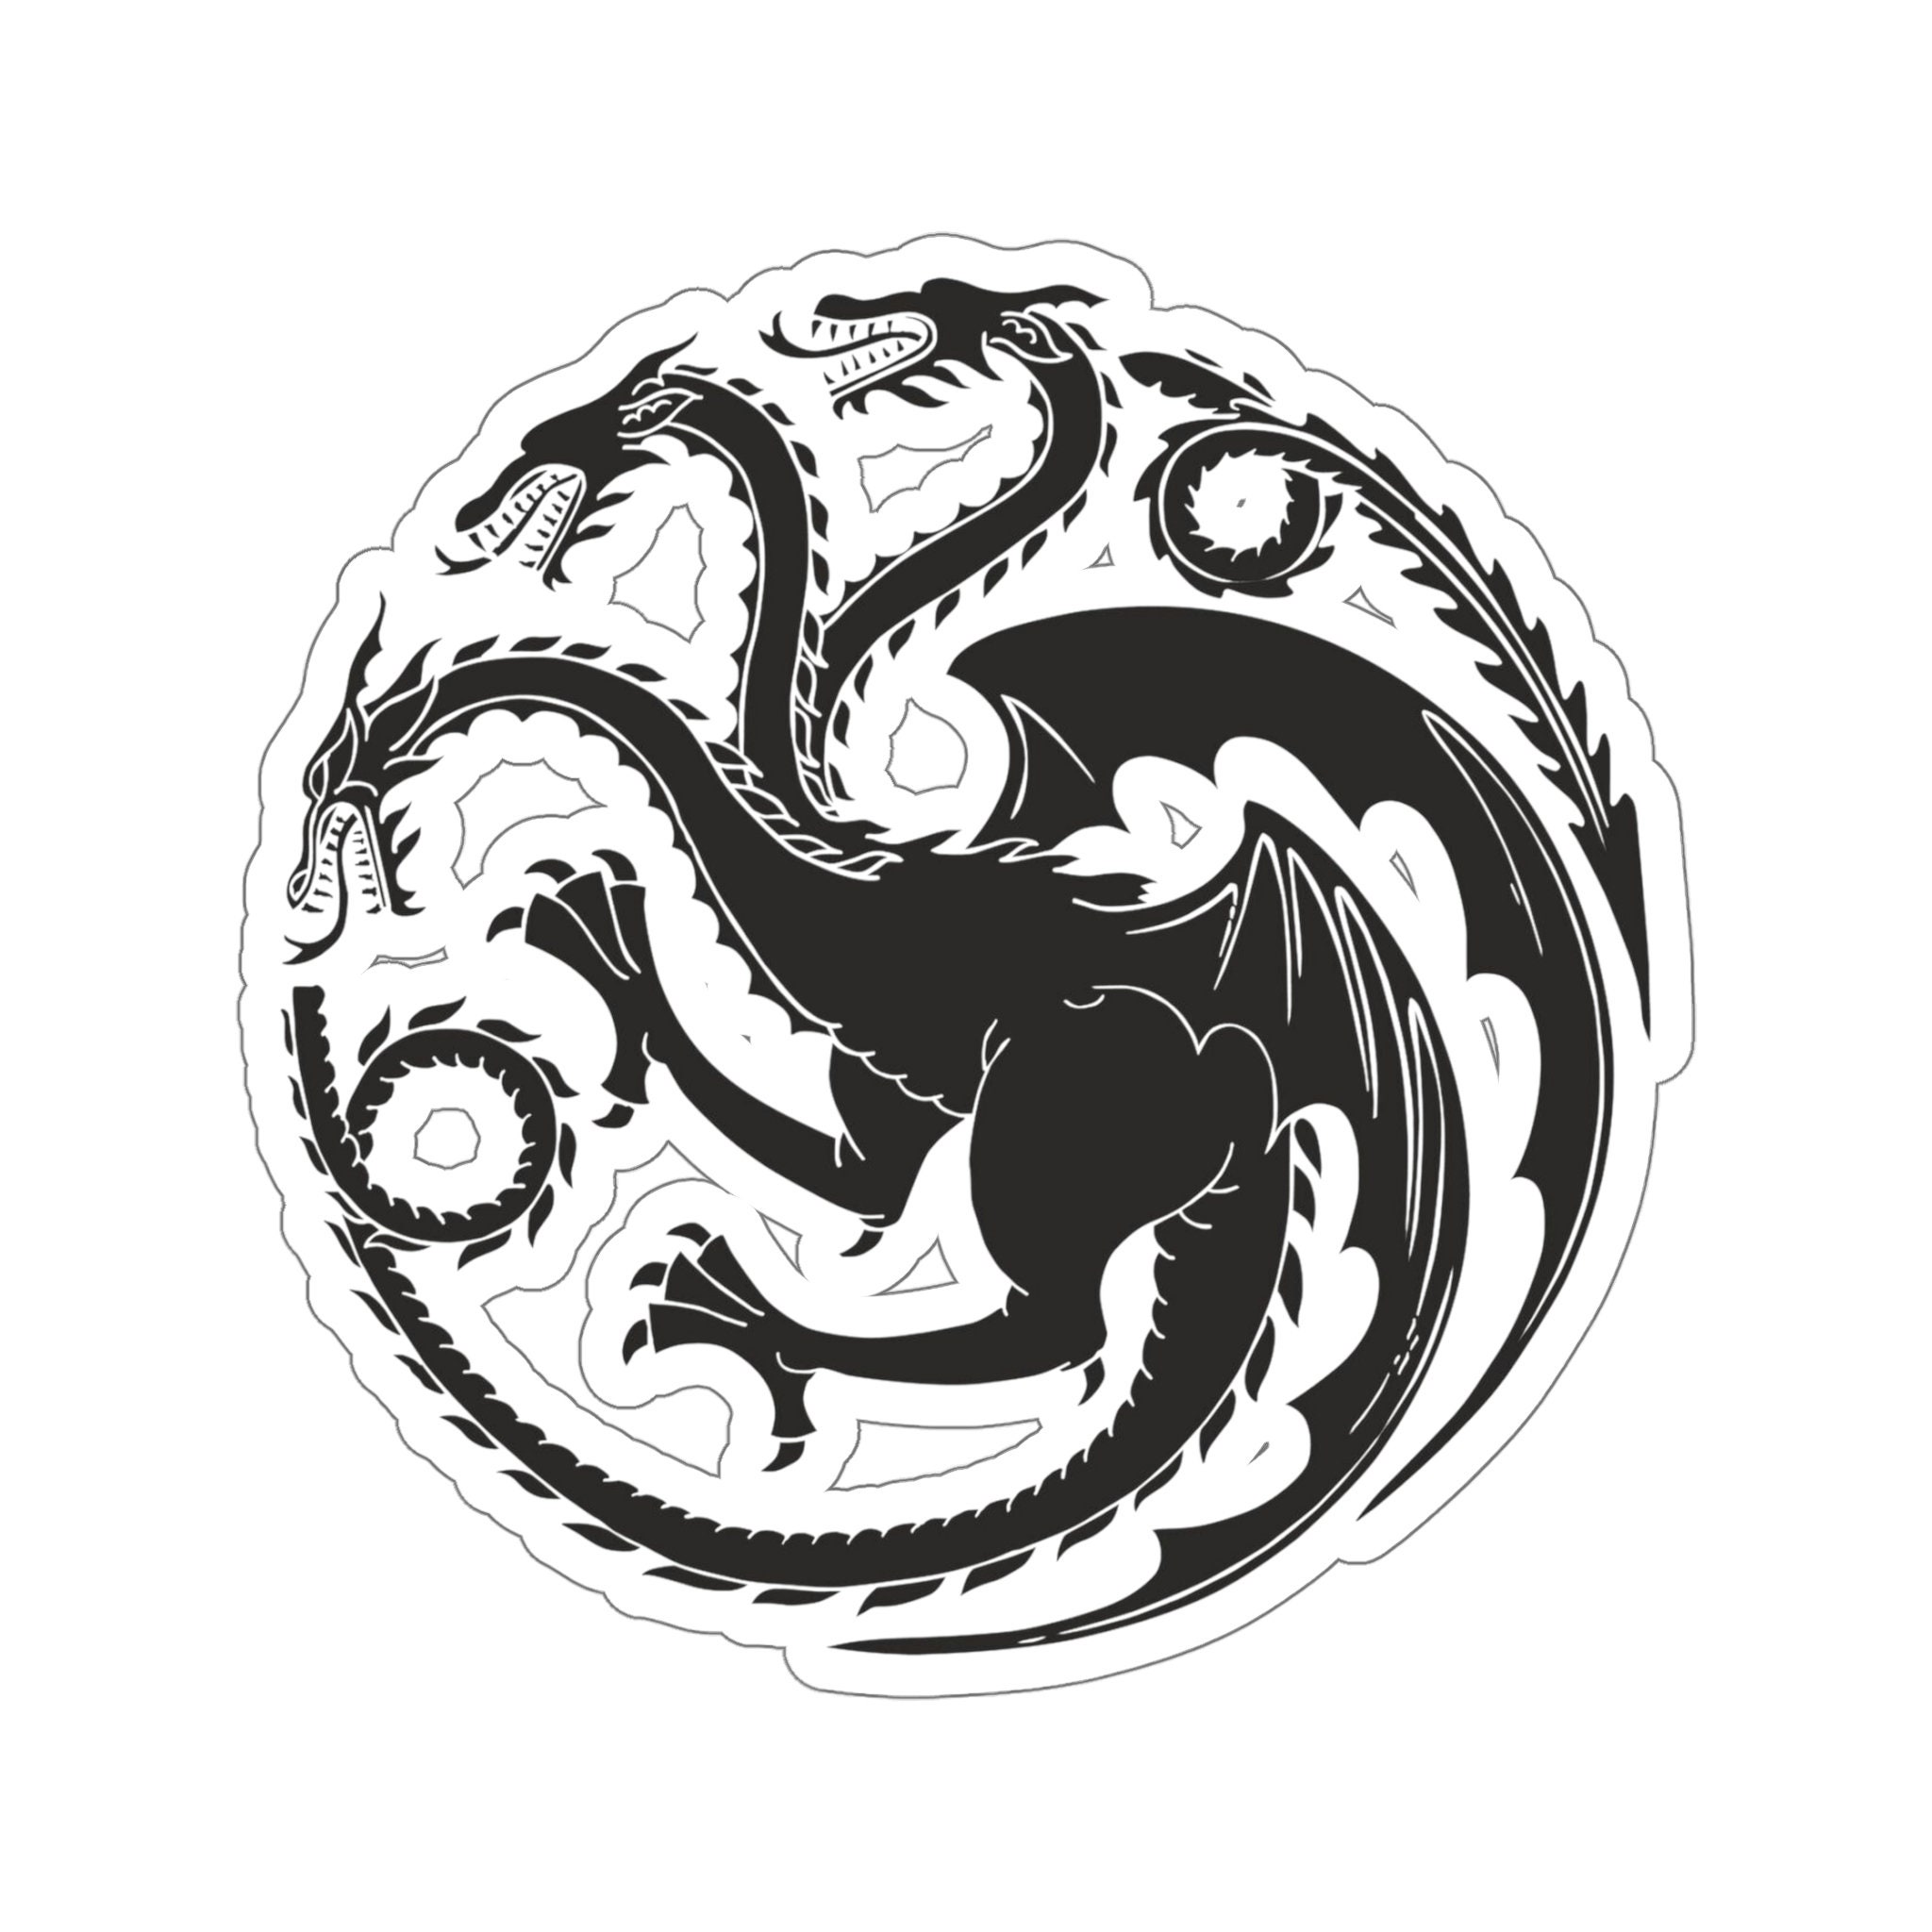 Game of Thrones House Stark Sigil Image Logo Peel Off Sticker